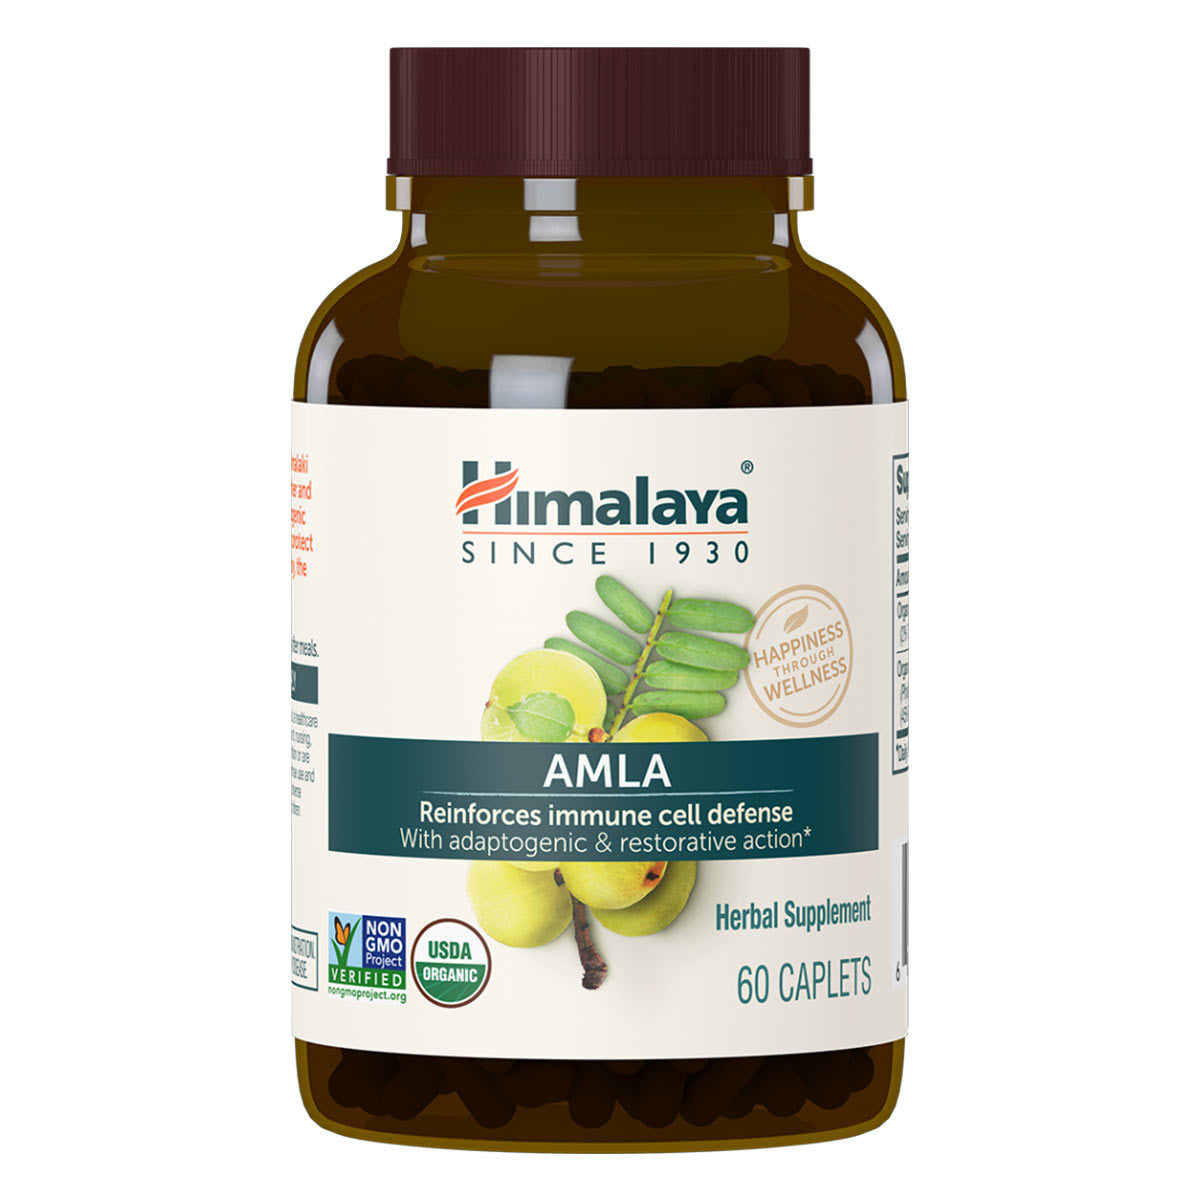 Primary image of Organic Amla